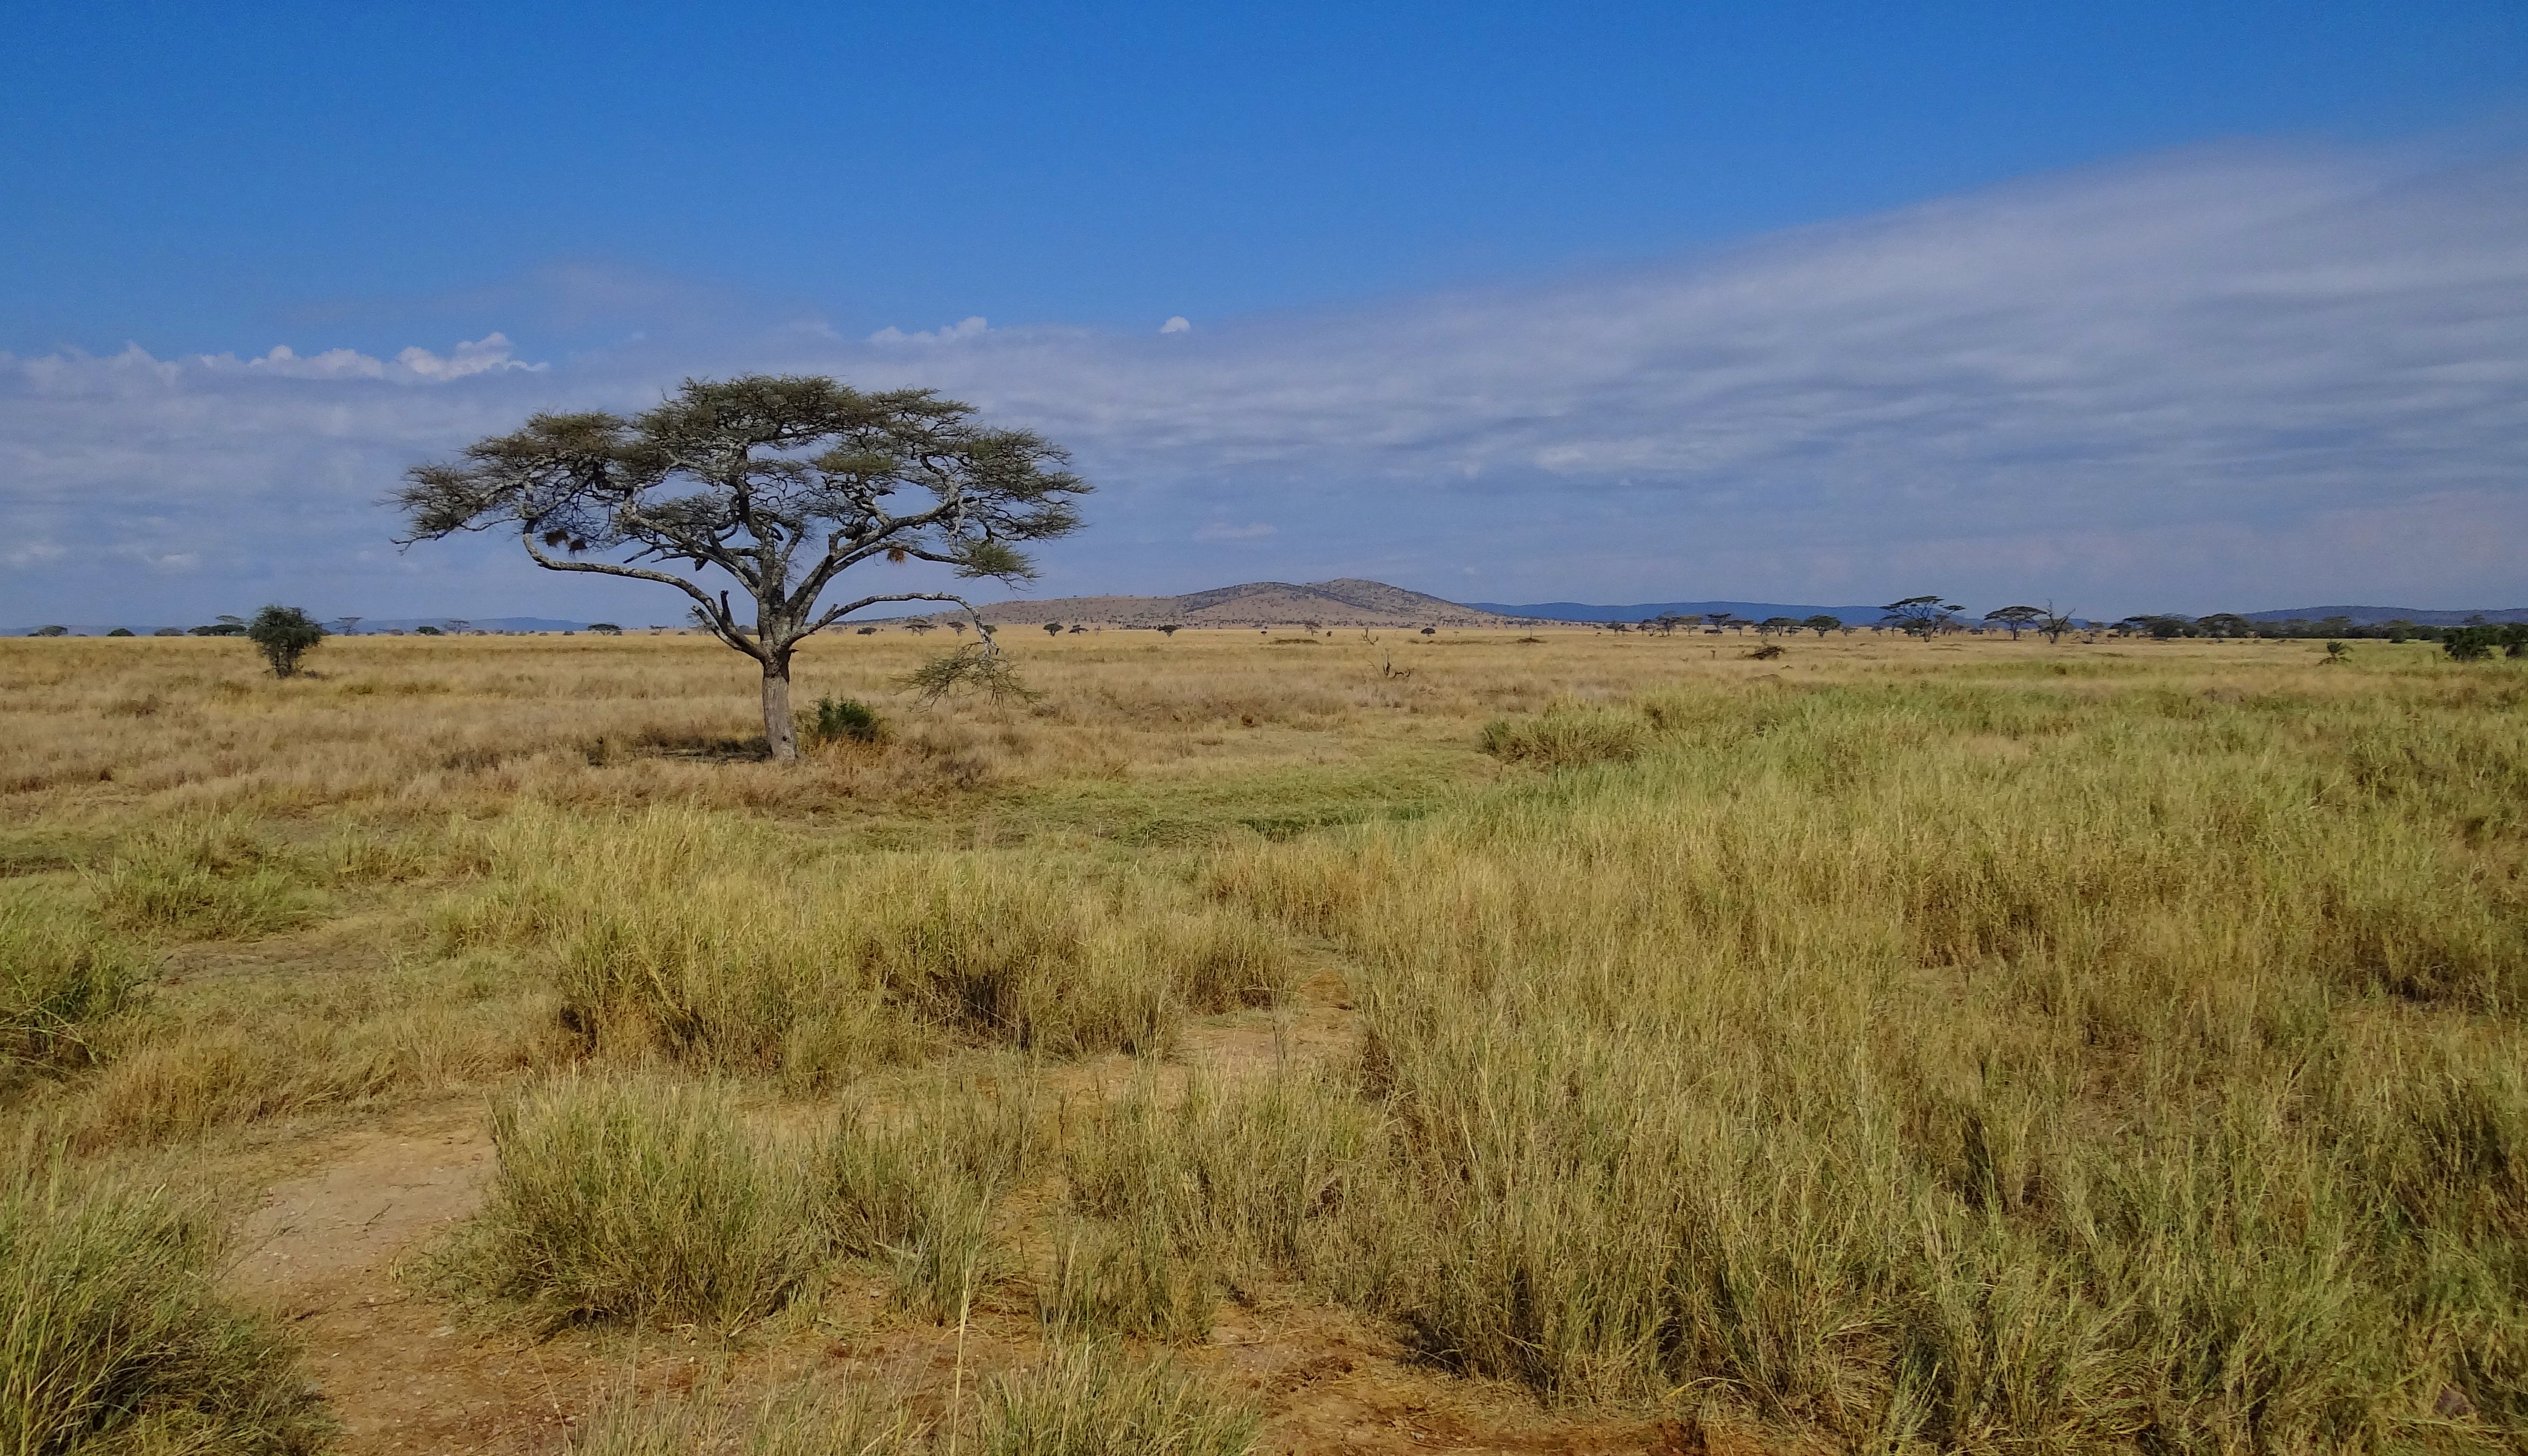 File:Serengeti-Landscape-2012.JPG - Wikimedia Commons